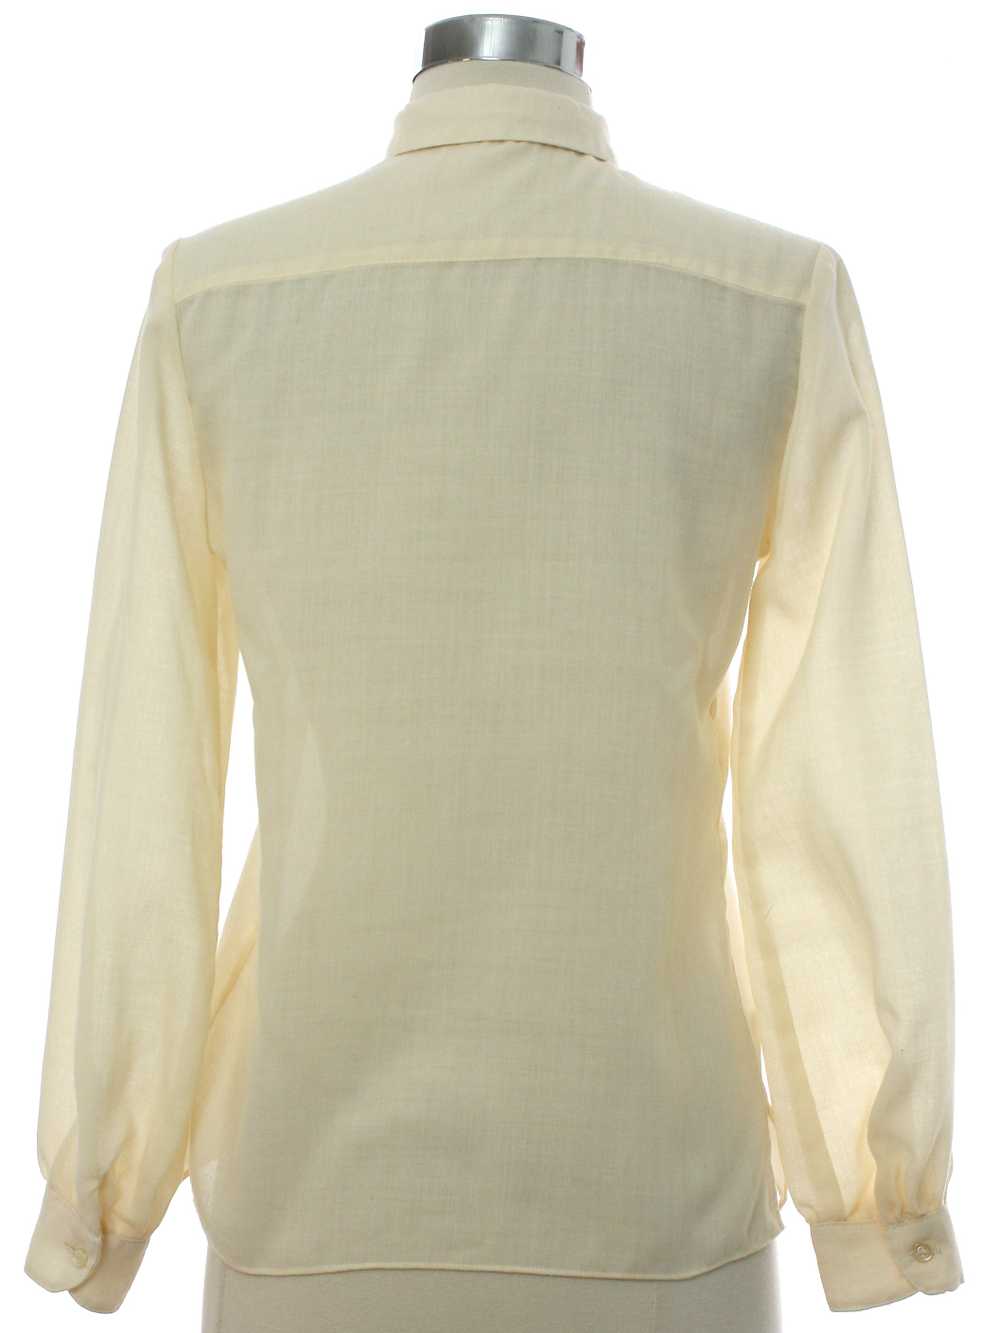 1980's Womens Pleated Secretary Shirt - image 3